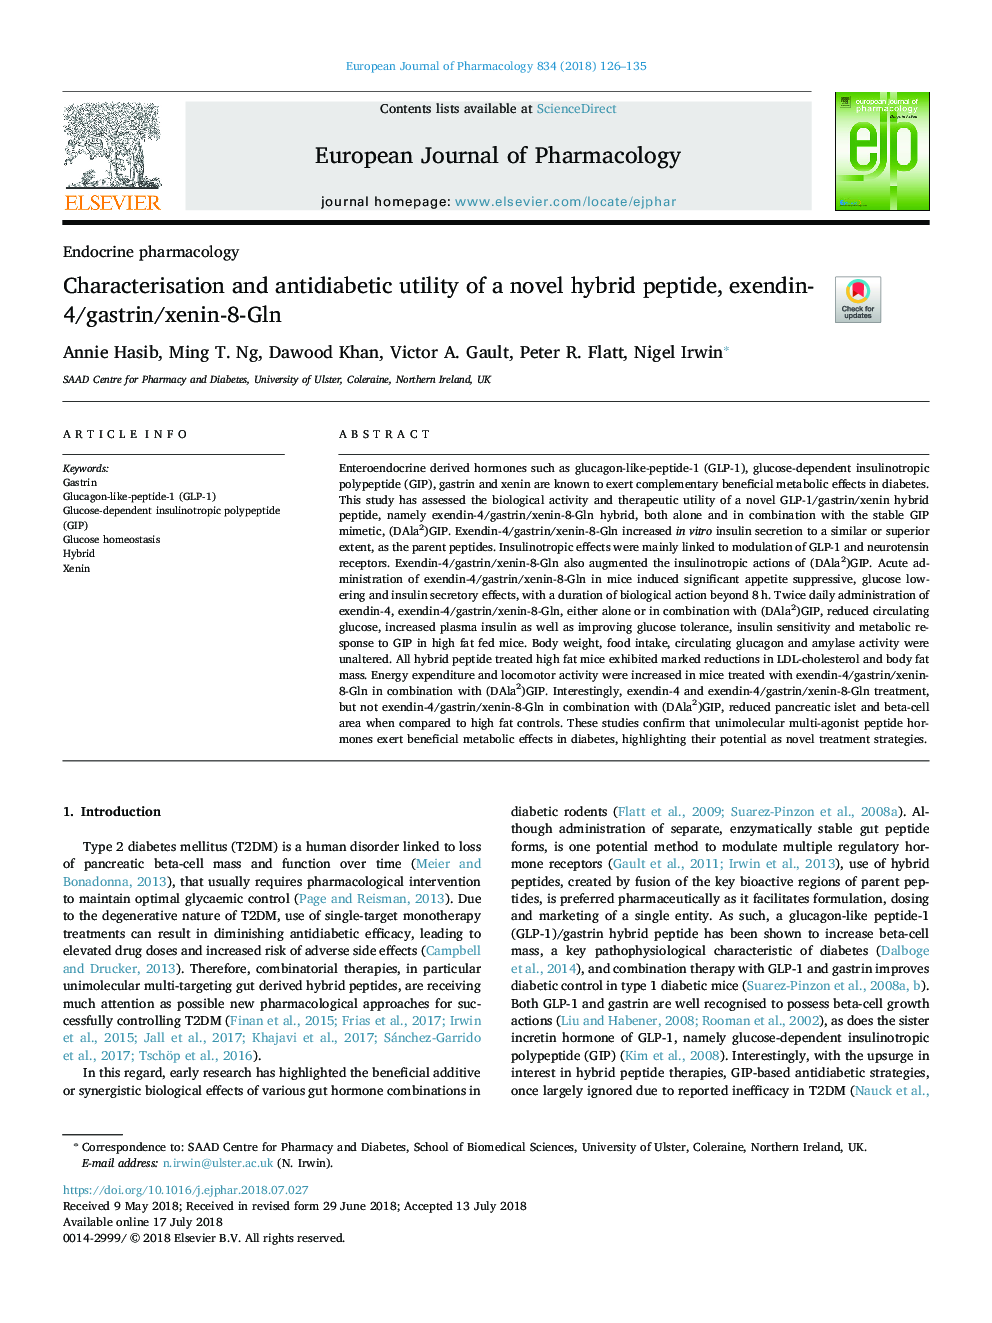 Characterisation and antidiabetic utility of a novel hybrid peptide, exendin-4/gastrin/xenin-8-Gln